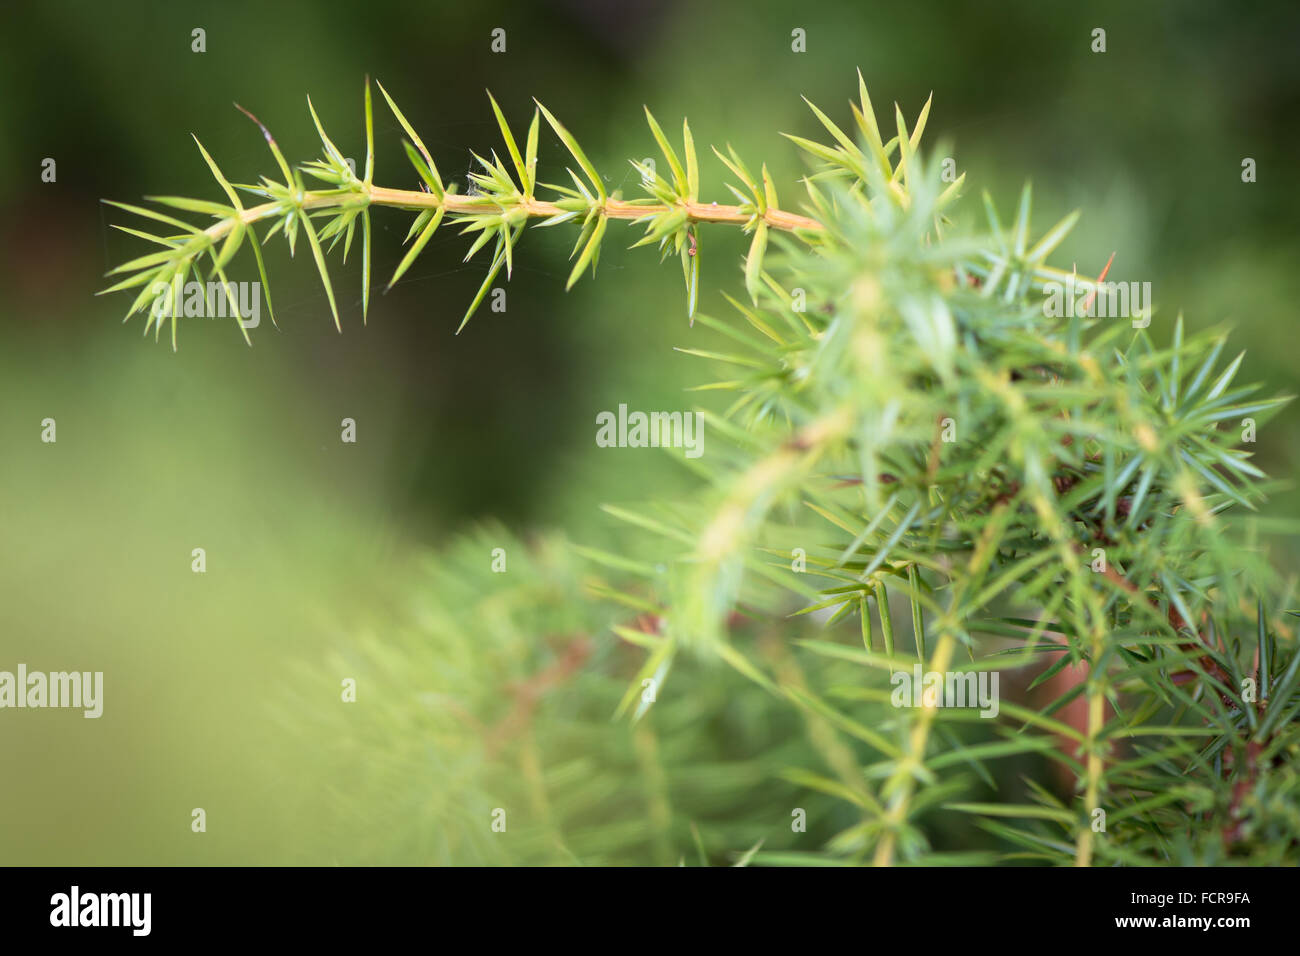 Common juniper (Juniperus communis). Detail of a juniper plant in family Cupressaceae showing needles and stems Stock Photo